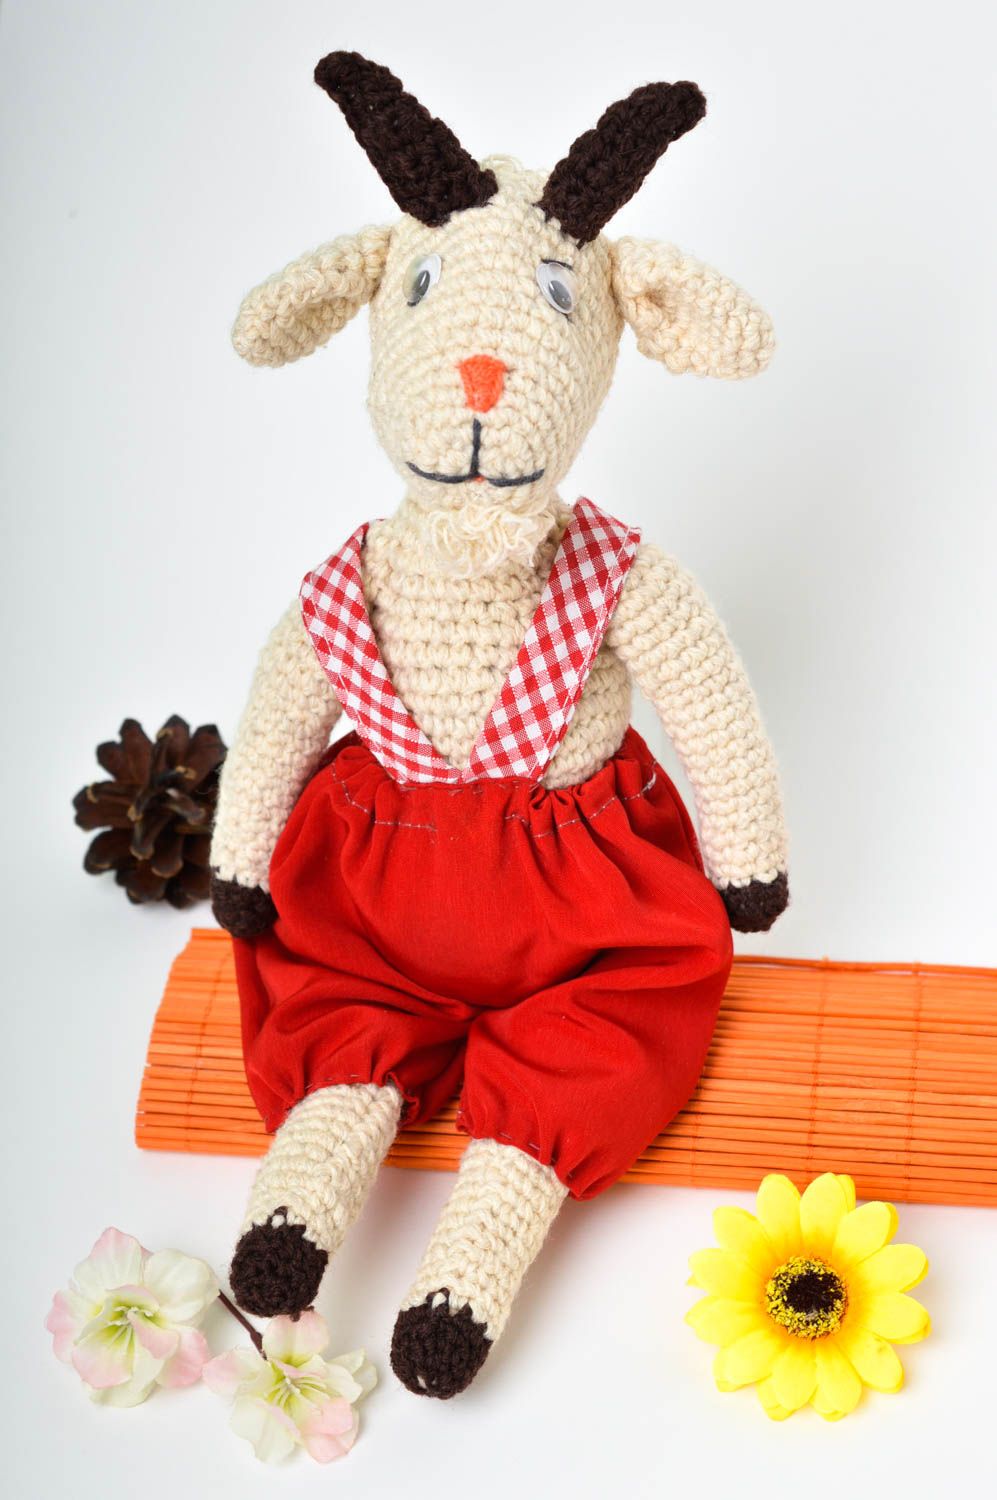 Handmade crocheted toy for babies nursery decor soft toys for children photo 1